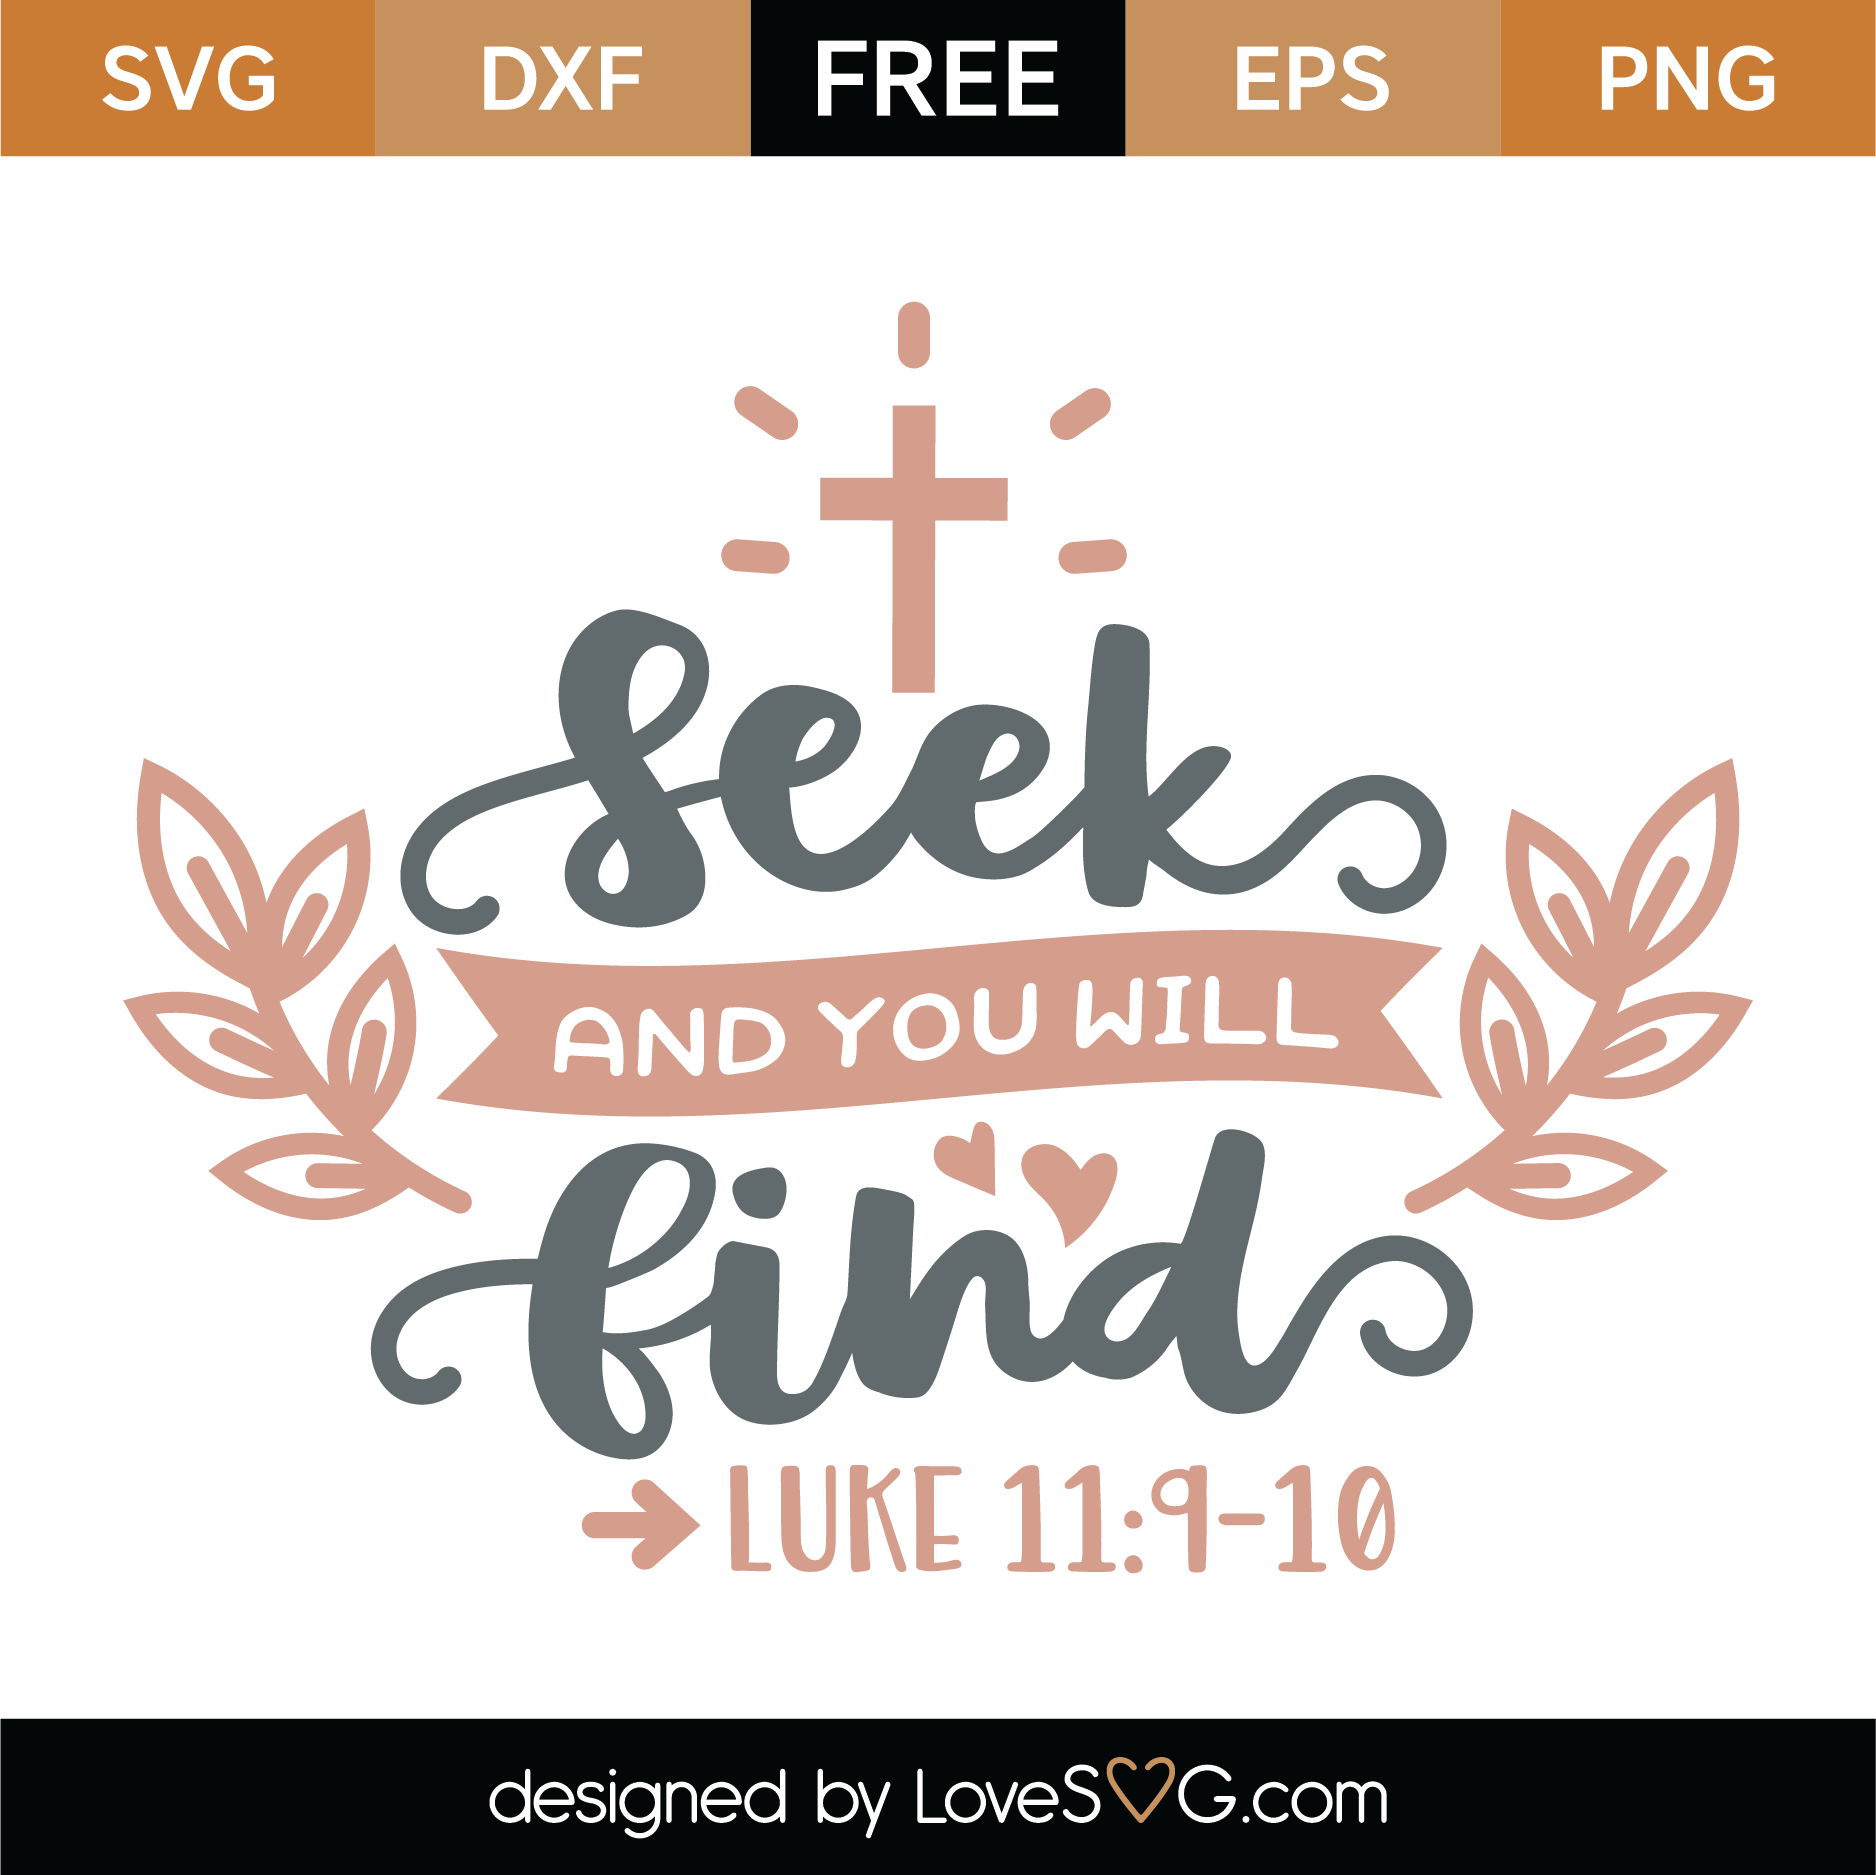 Download Free Luke 11:9-10 SVG Cut File | Lovesvg.com